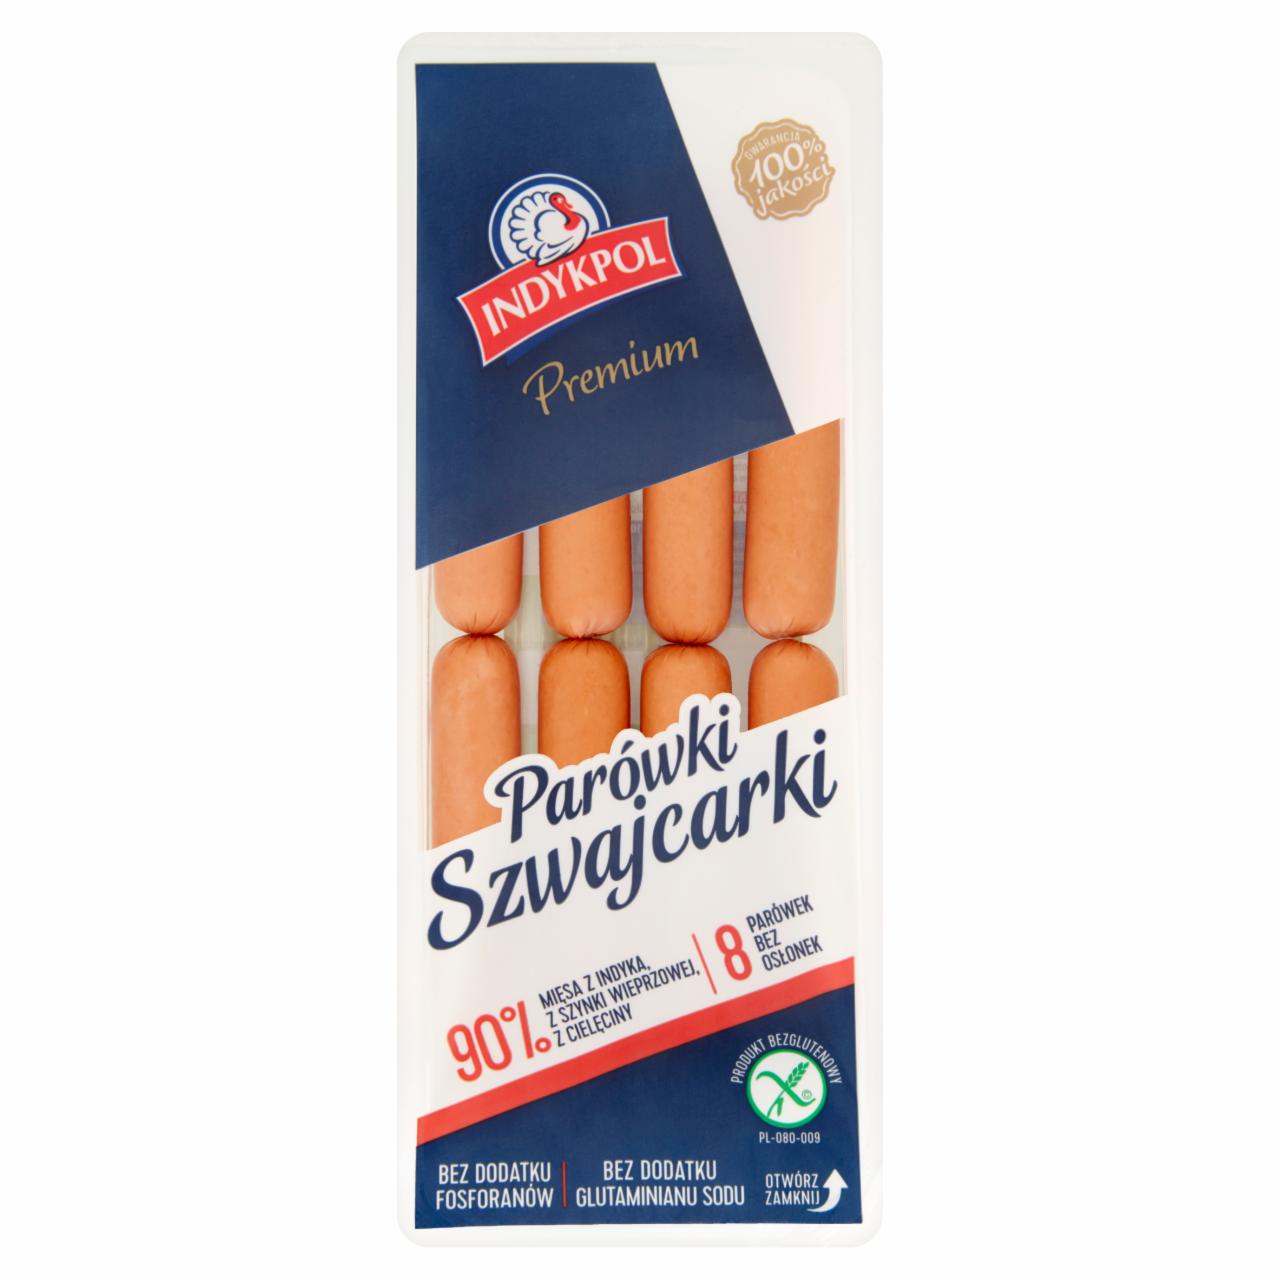 Photo - Indykpol Premium Szwajcarki Thin Sausages 180 g